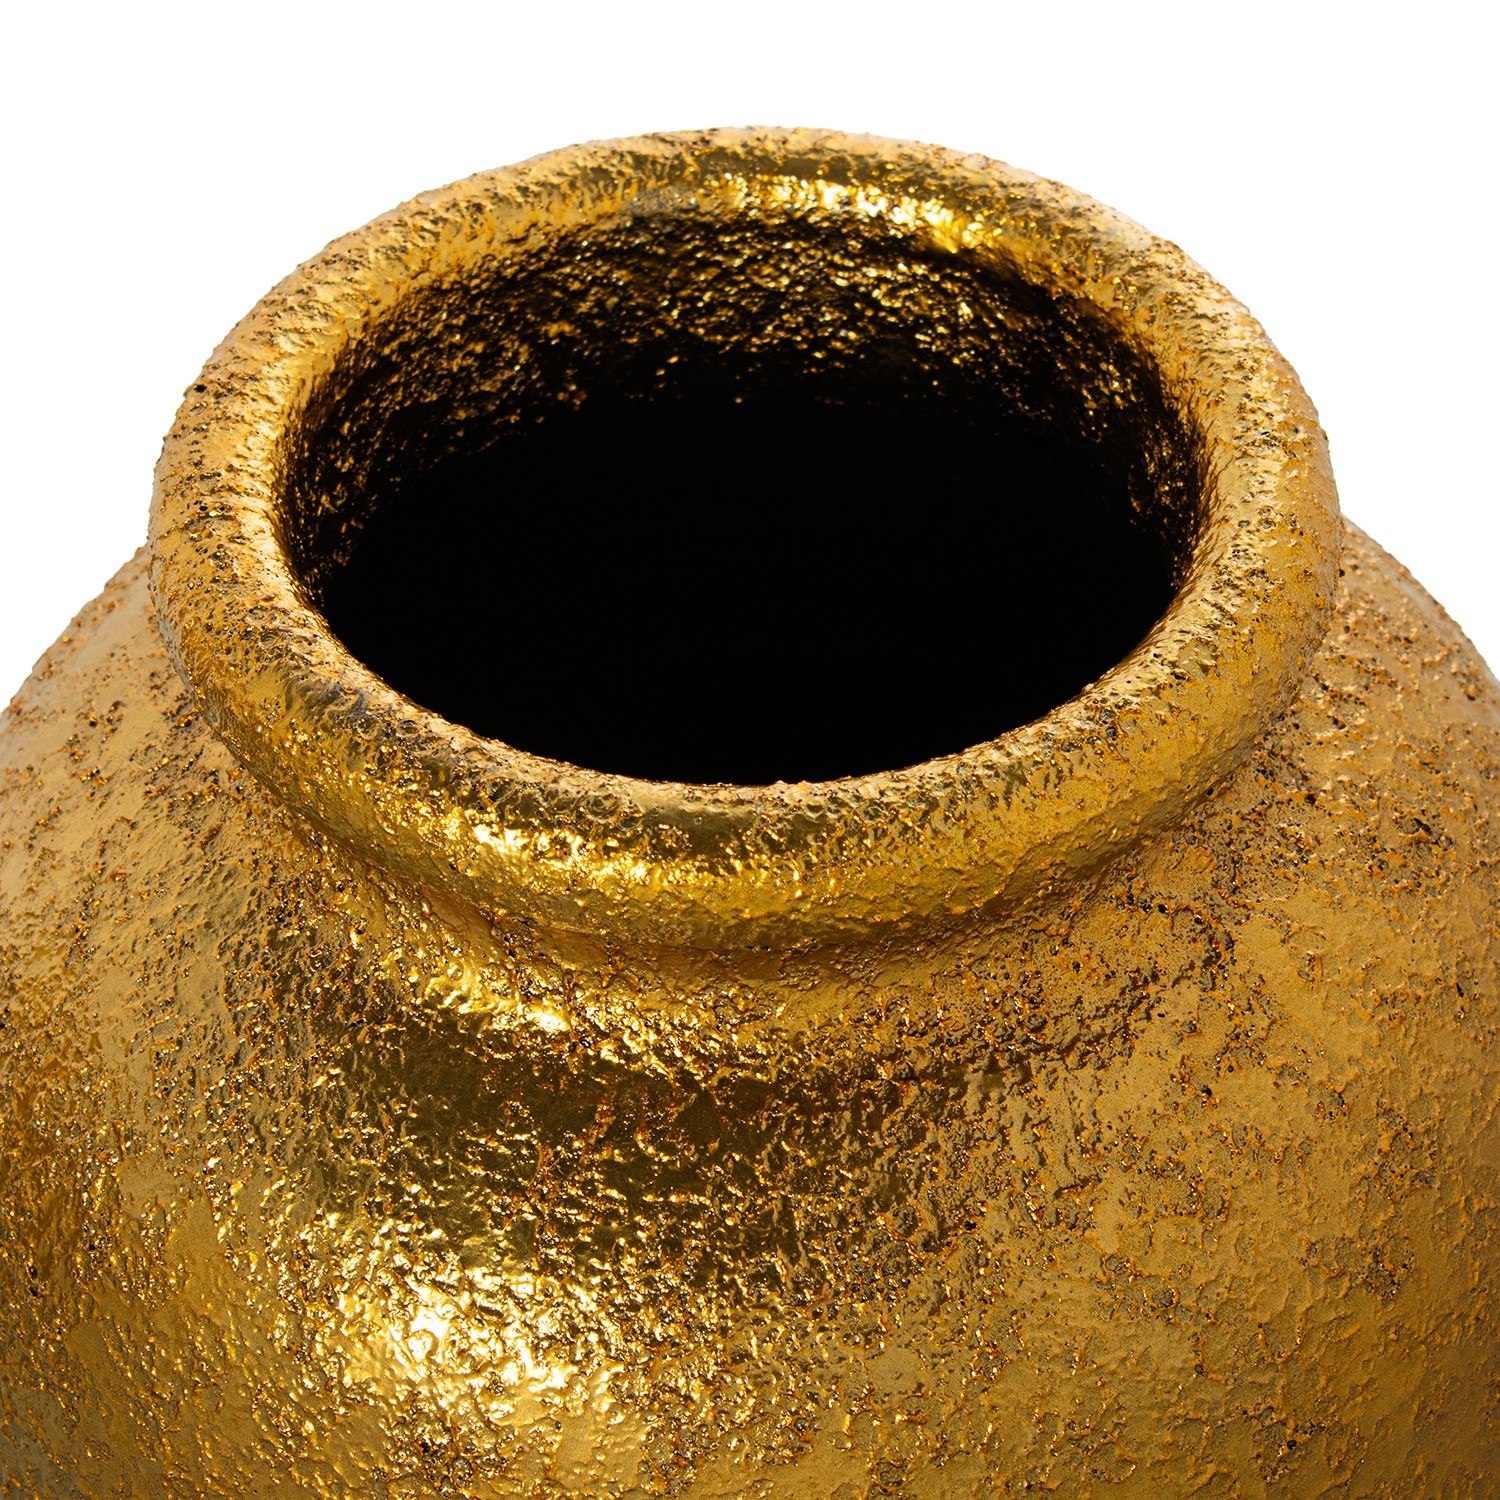 35290-jarron-ceramica-tinaja-dorado-2.jpg